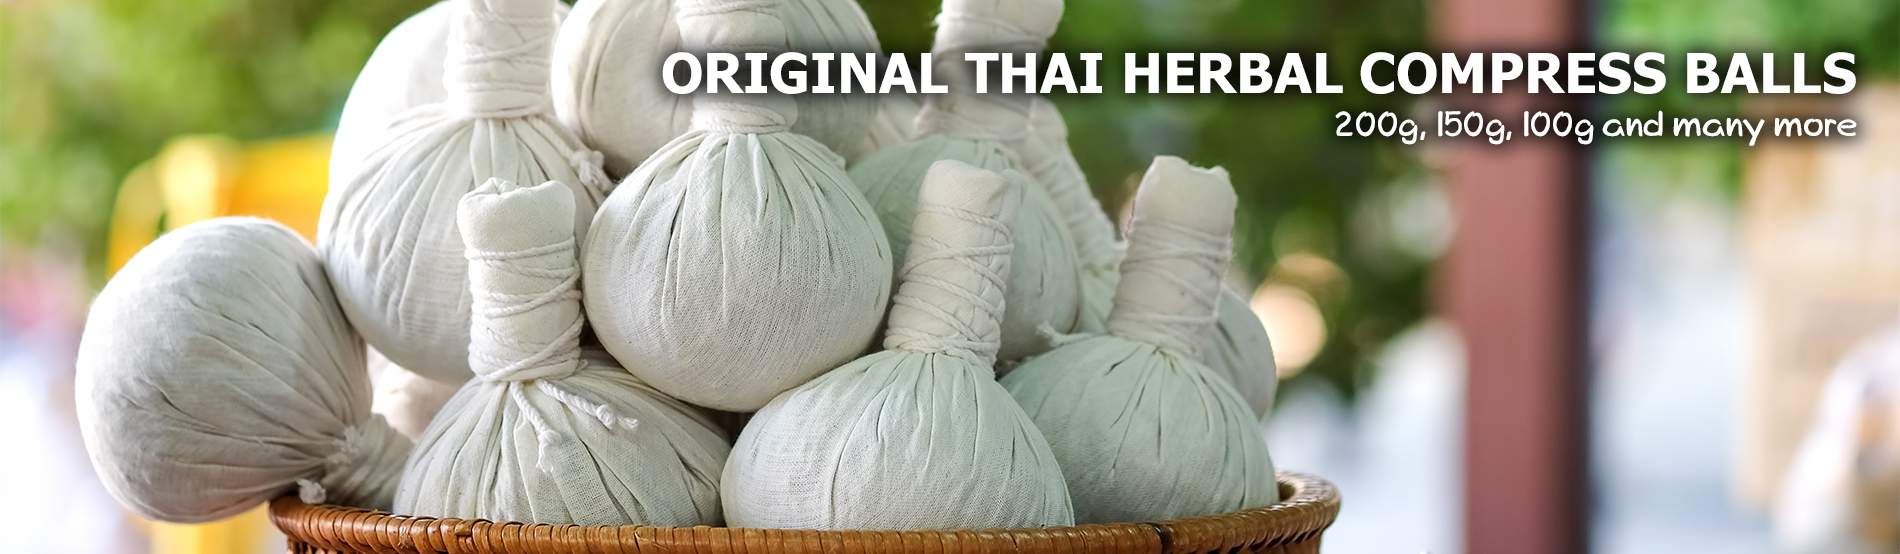 Thai herbal compress balls